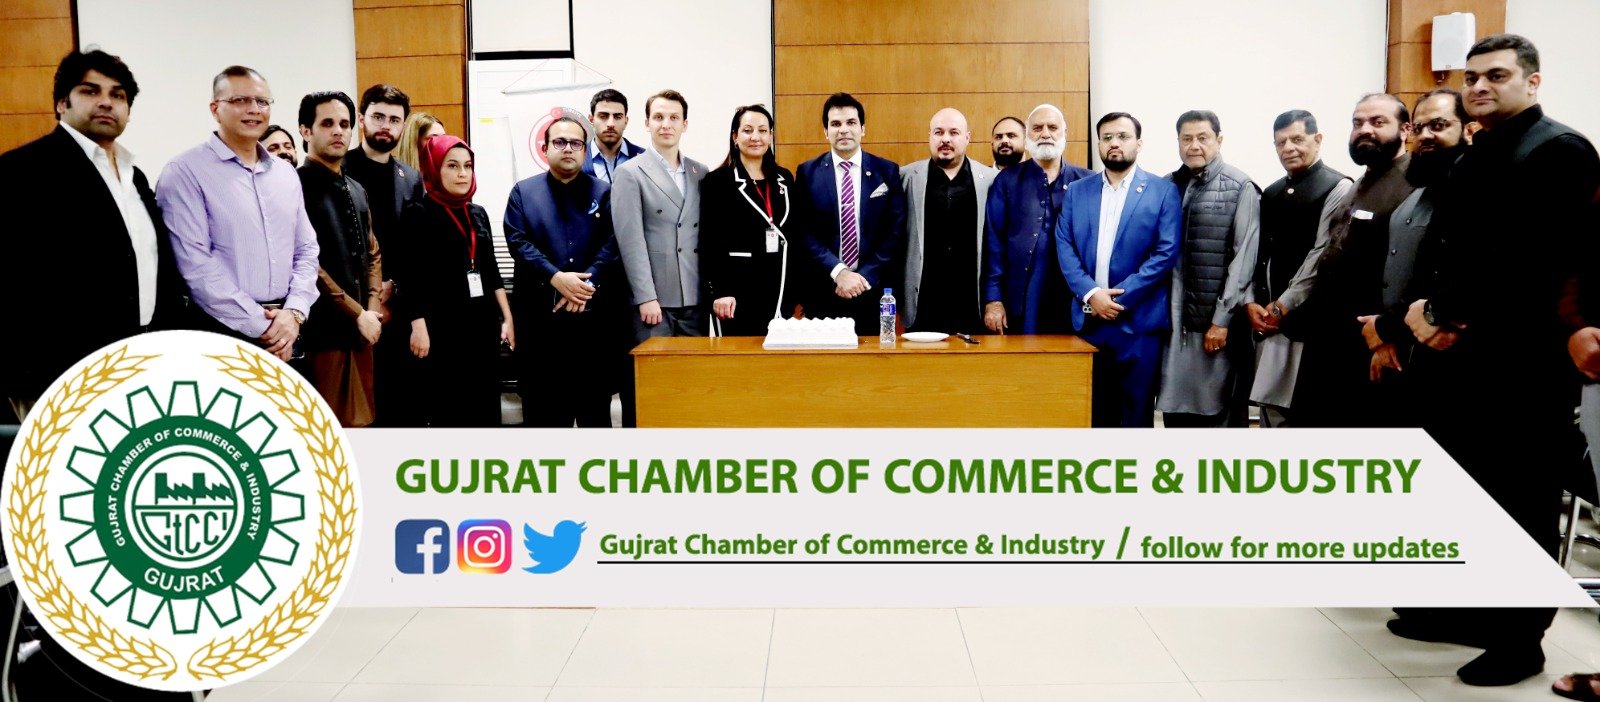 A #Business #Delegation from #Turkiye including Ms. Hulya Selagzi, Mr. Burak Evci, Mr. Barkin Zafer, Mr. Armagan Oner, Ms. Toba Topcu, Mr. Ilknur Polat, Necati Yazici, Mr. Mustafa Biter, Mr. Ayberk Oztopal visited Gujrat Chamber of Commerce and Industry #GtCCI